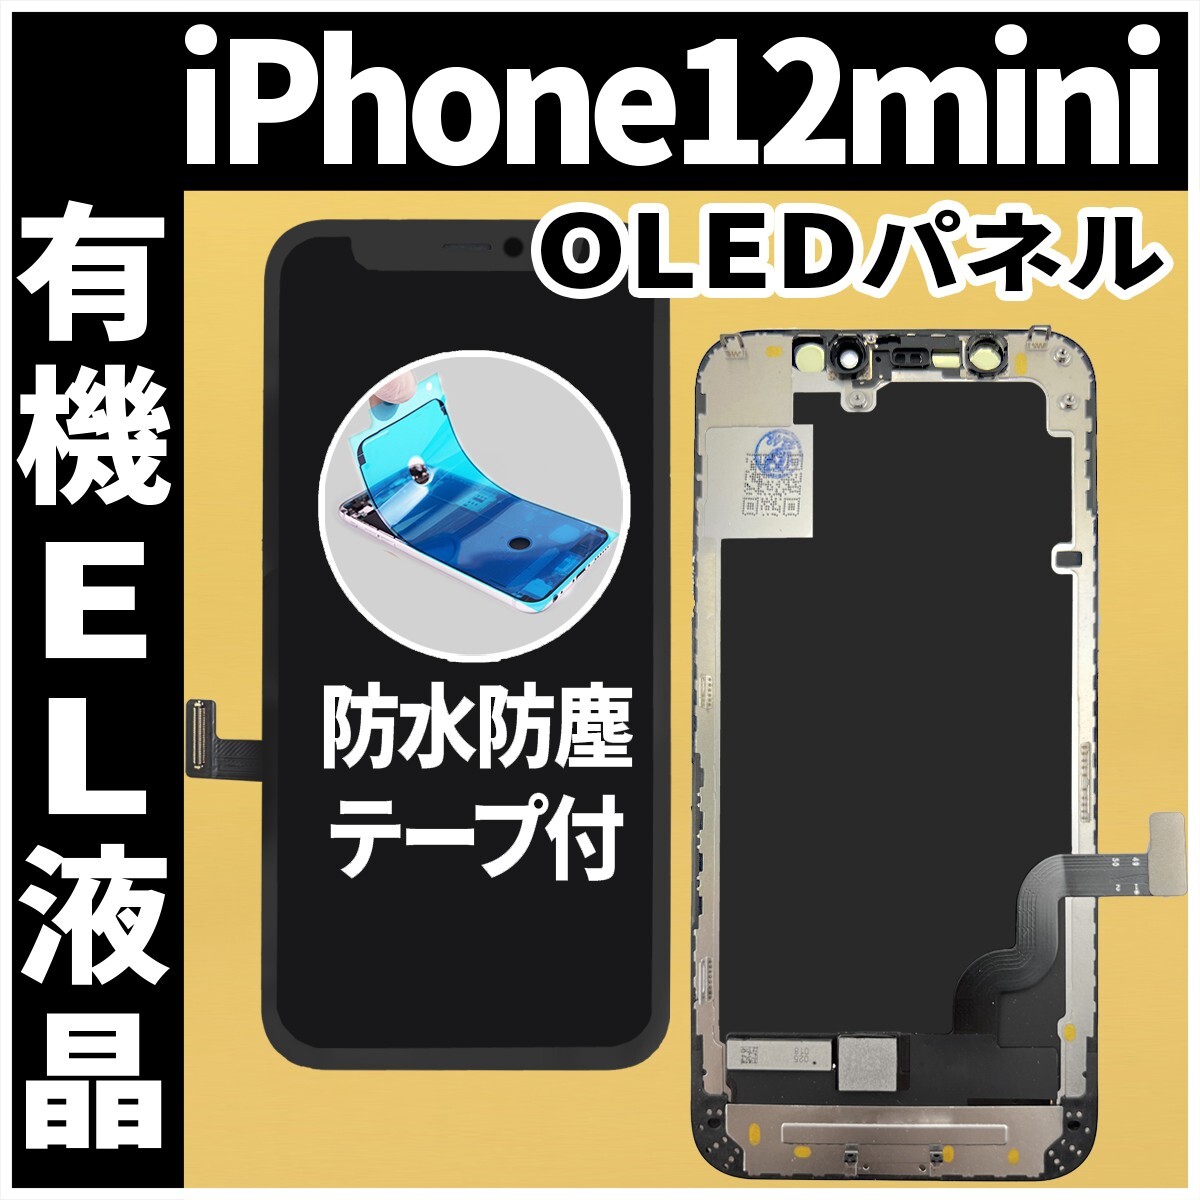 iPhone12mini フロントパネル 有機EL液晶 OLED 防水テープ 工具無 互換 ガラス割れ 画面割れ 液晶 修理 iphone ディスプレイ 純正同等の画像1